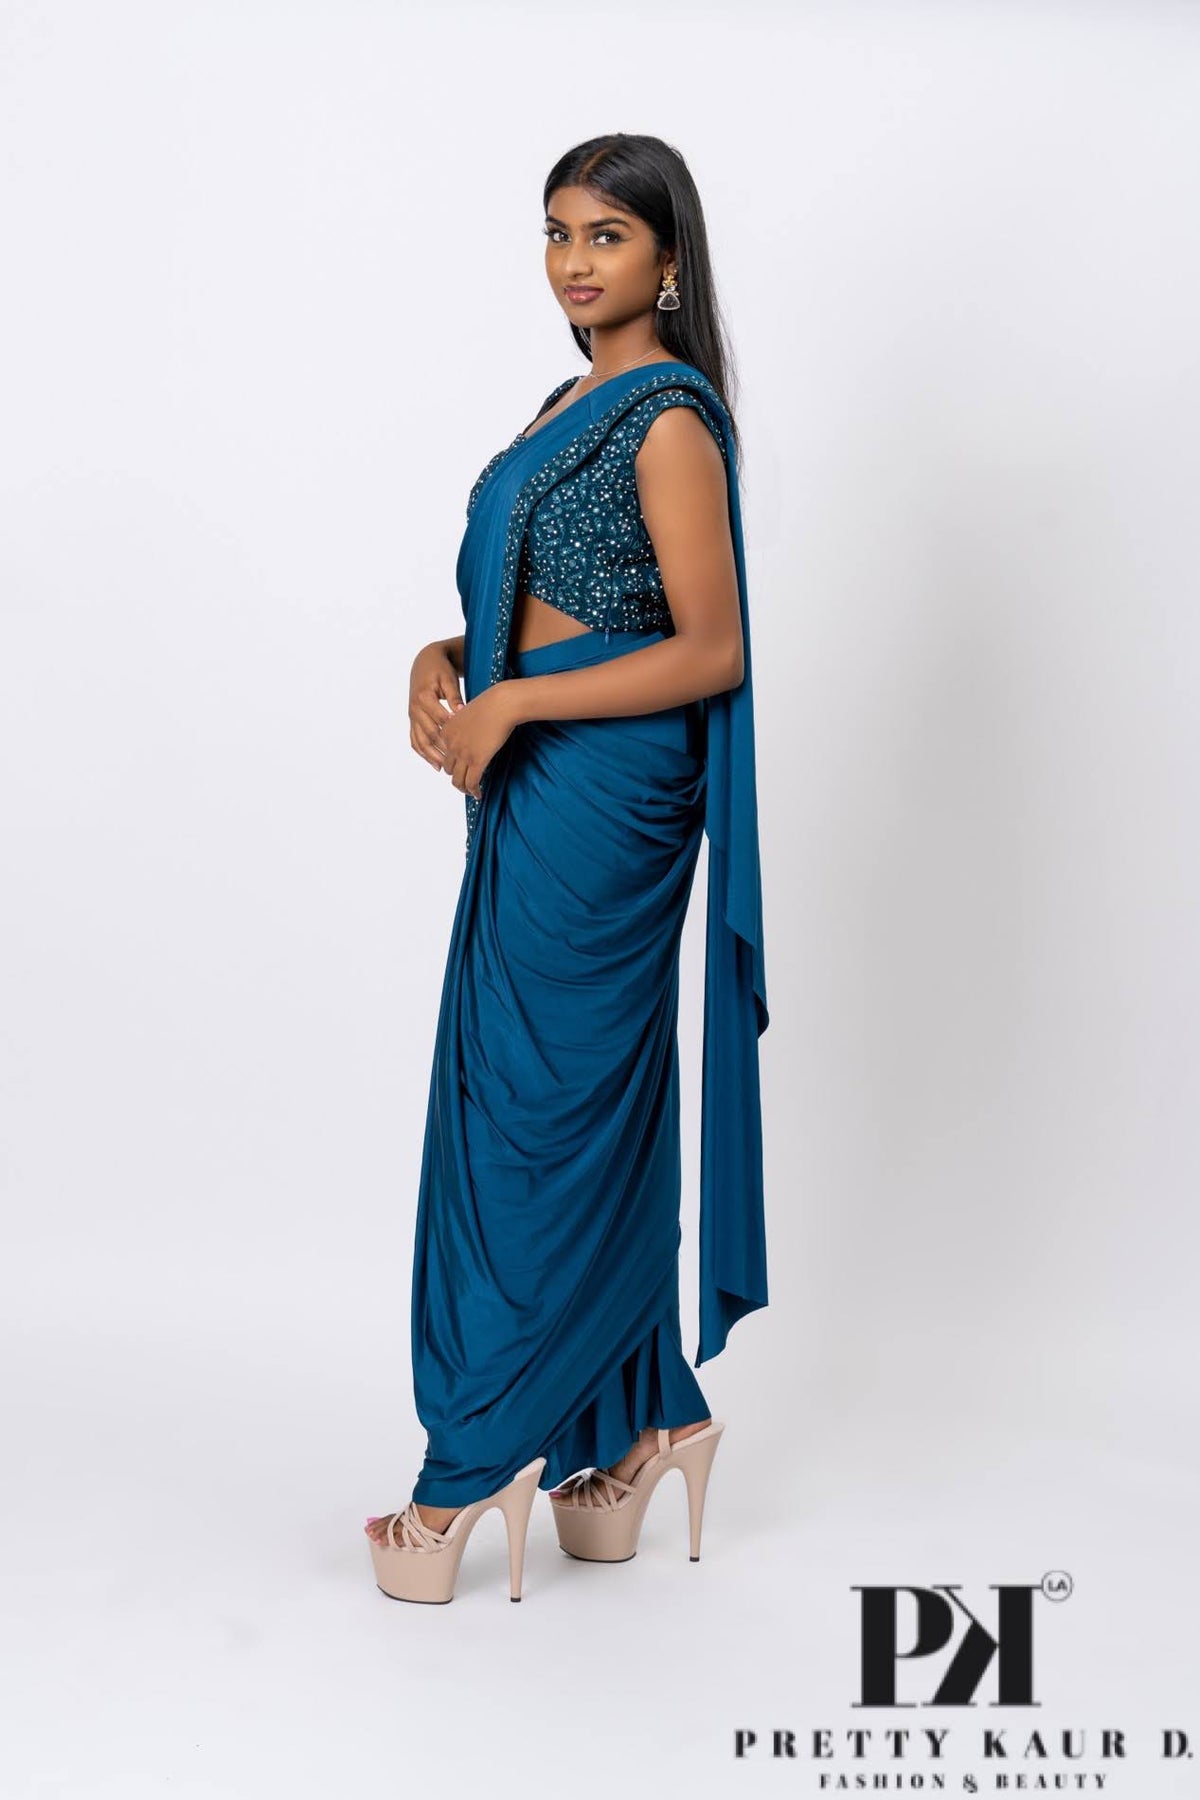  Pretty-Kaur-fashion-beauty-Indian-Designer-Saree-3